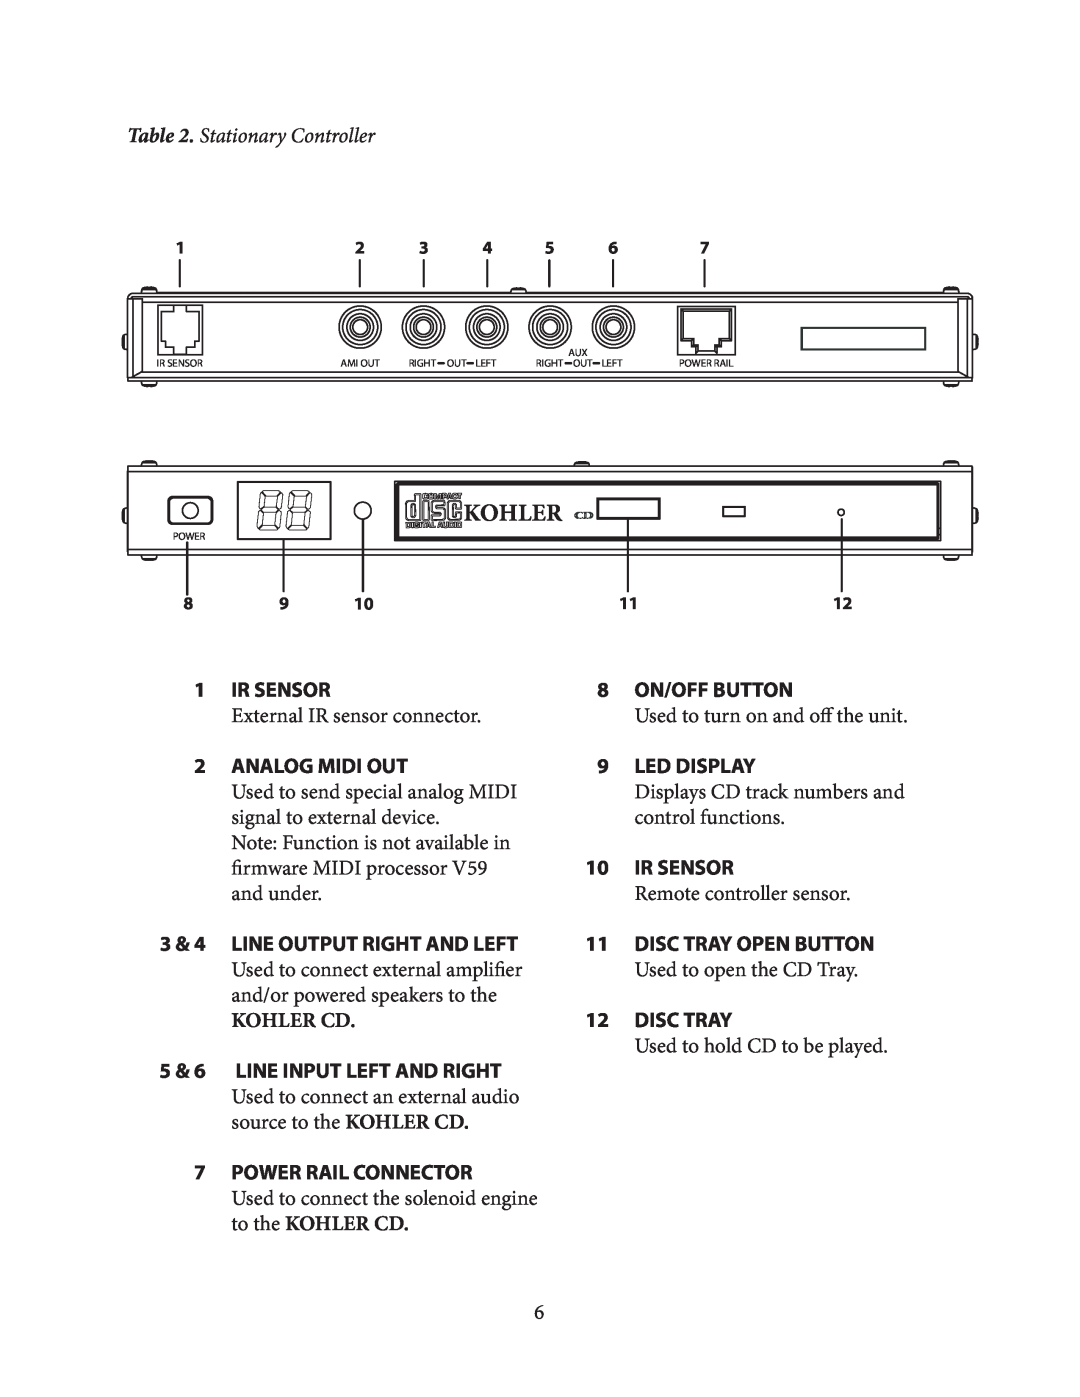 Kohler KD165 manual Stationary Controller, Ir Sensor, Analog Midi Out, Kohler Cd, Power Rail Connector, 8 ON/OFF BUTTON 